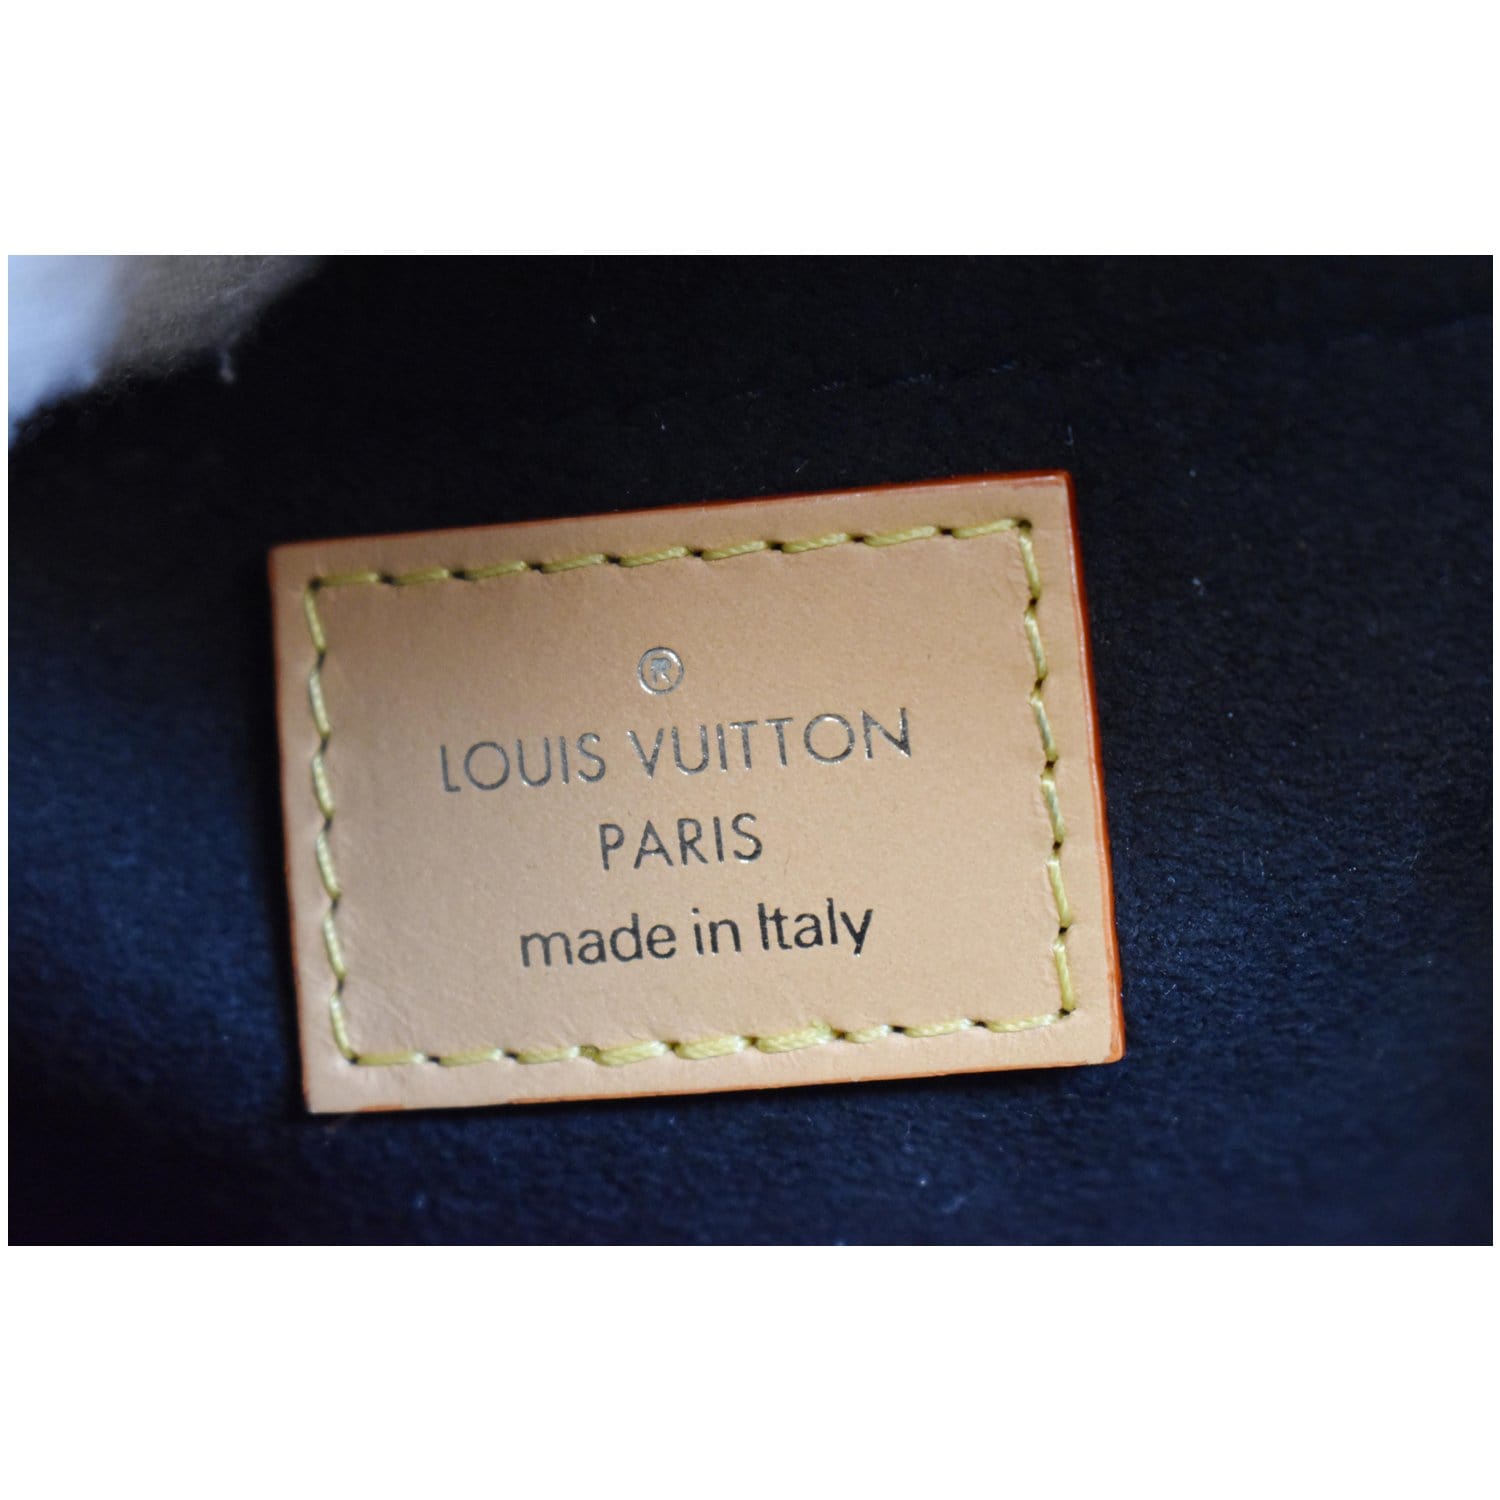 Louis Vuitton Monogram Canvas and Leather LV Egg Bag